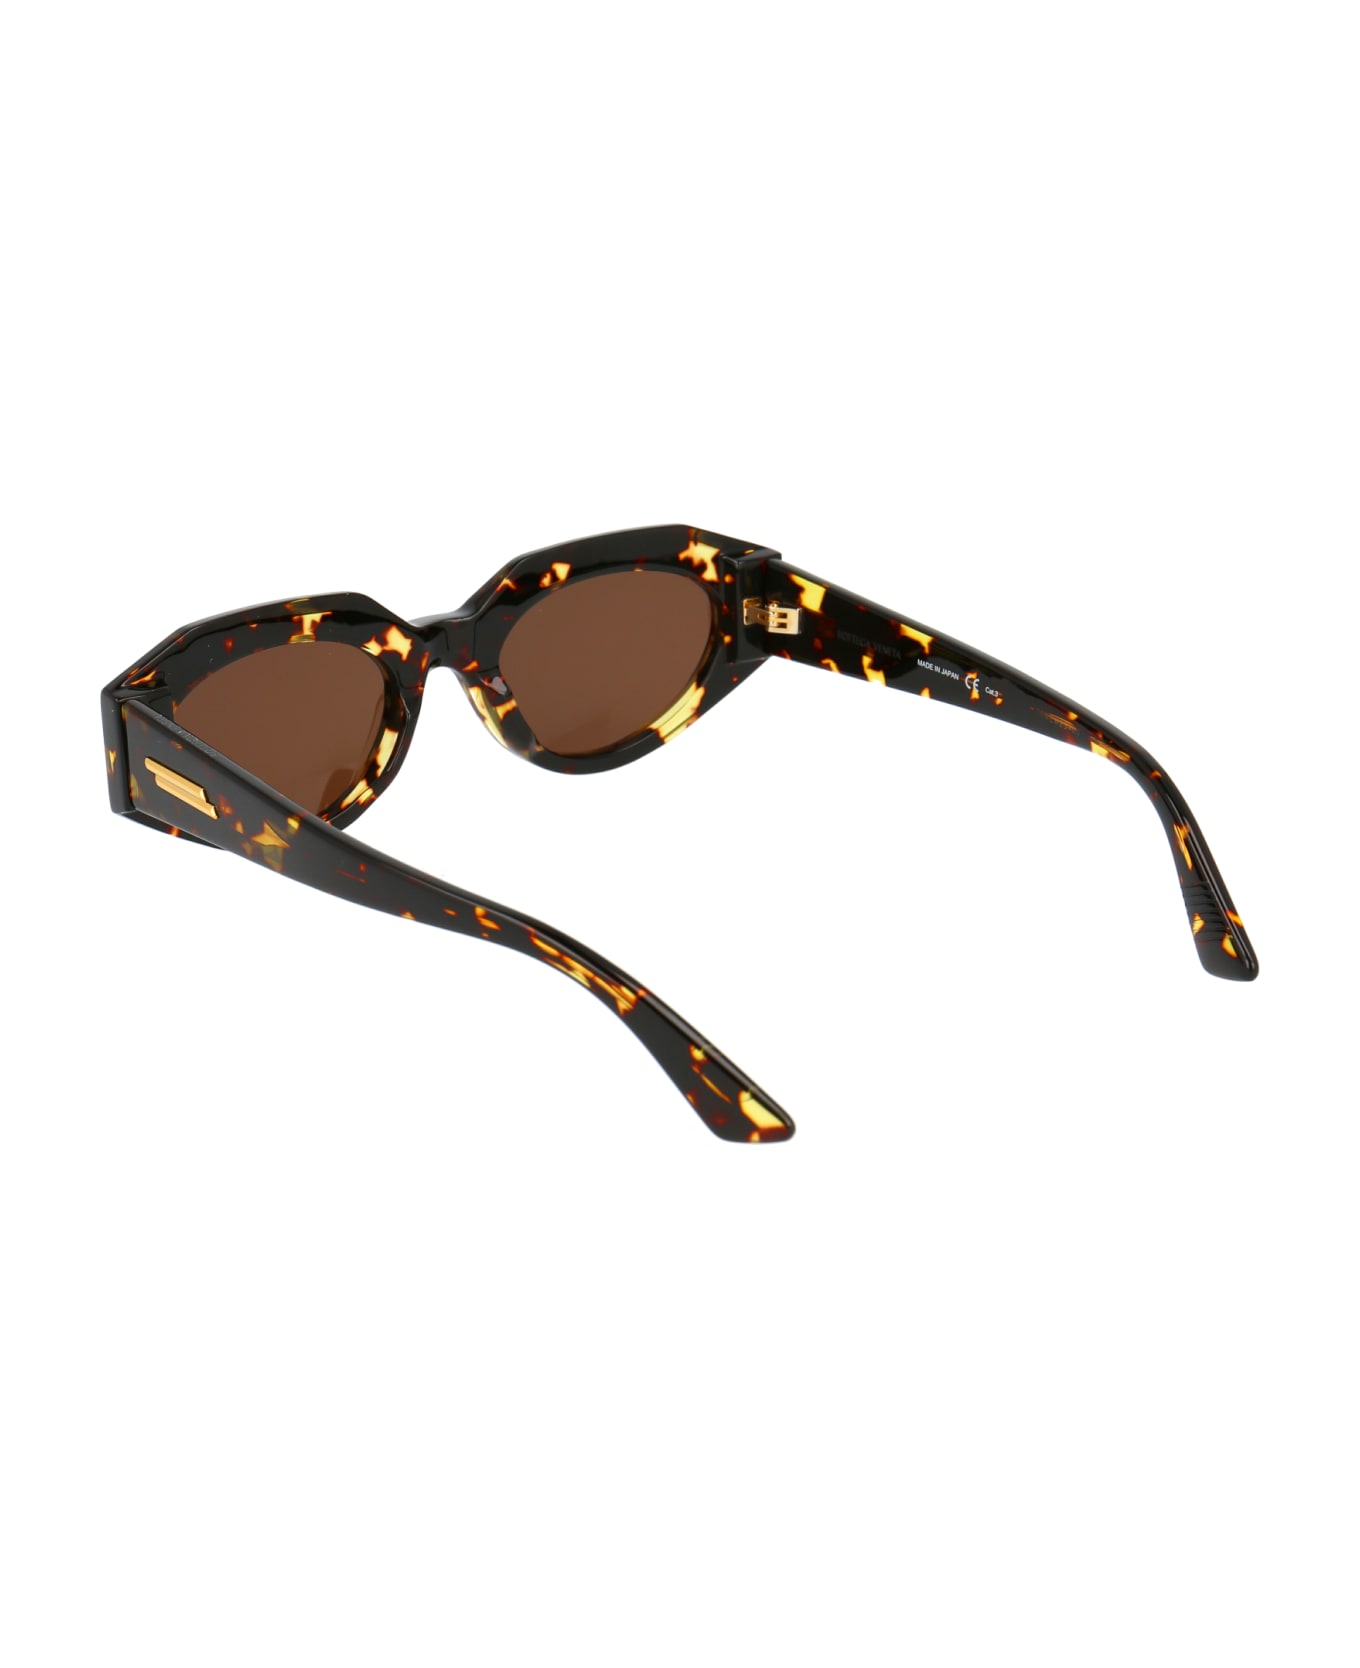 Bottega Veneta Eyewear Bv1031s Sunglasses - 002 HAVANA HAVANA BROWN